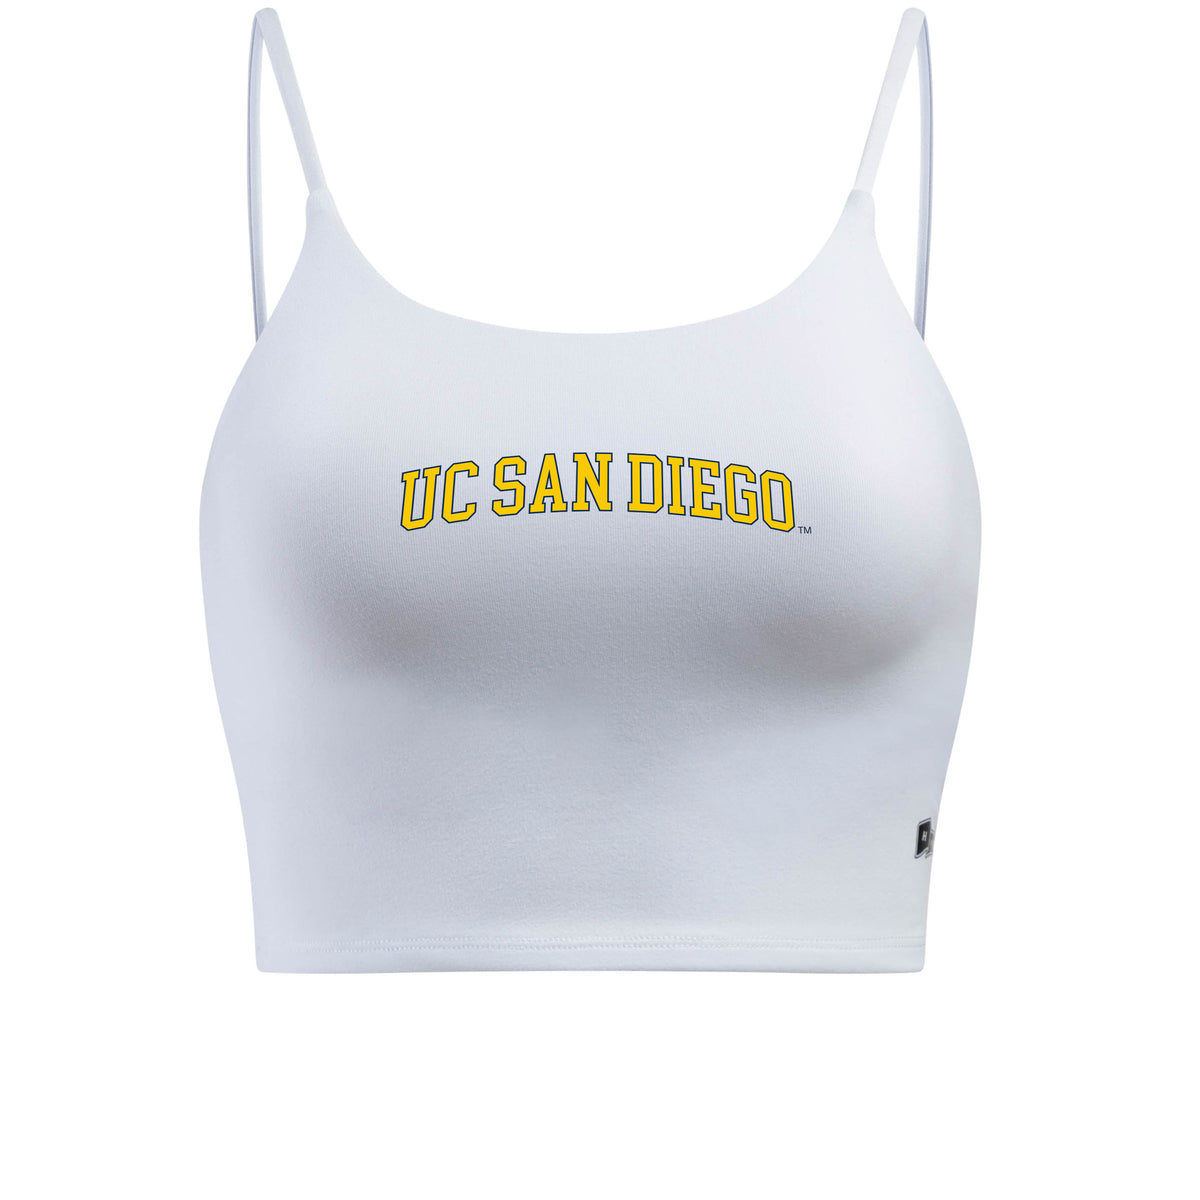 University of California San Diego Bra Tank Top